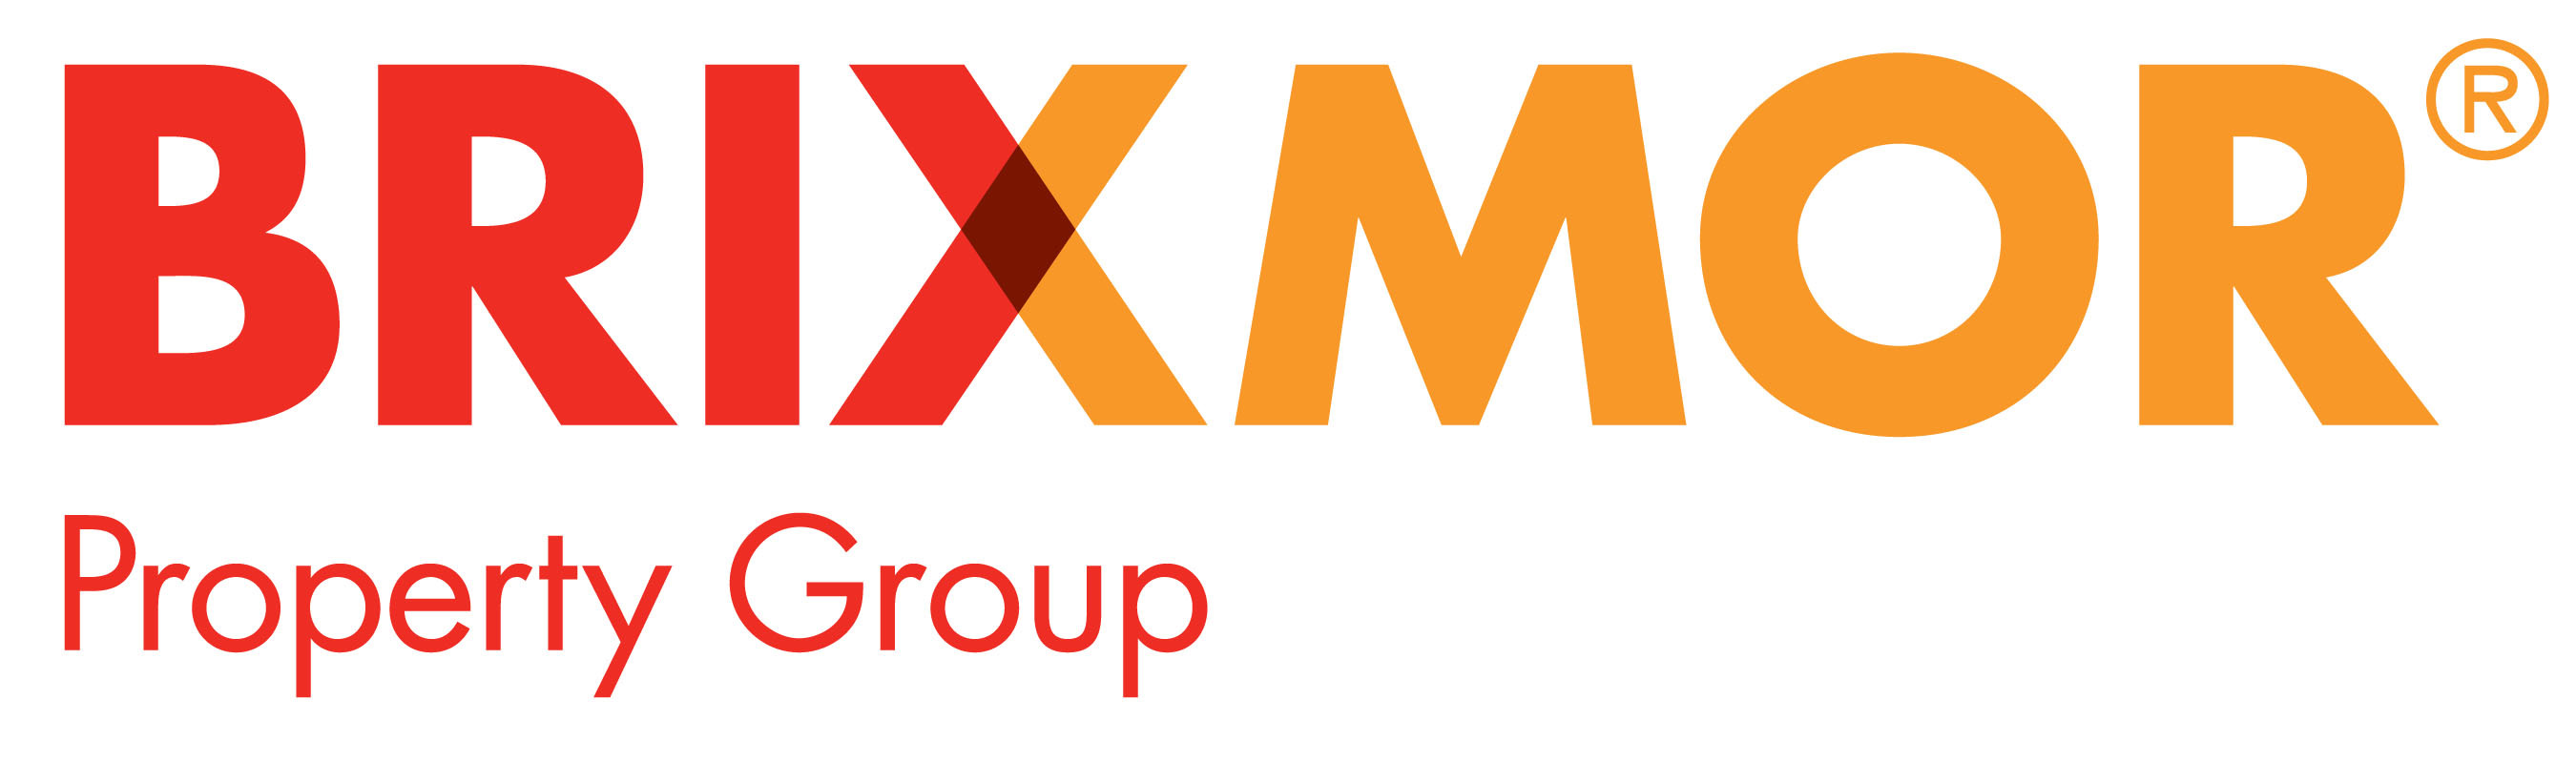 Brixmor Property Group Logo